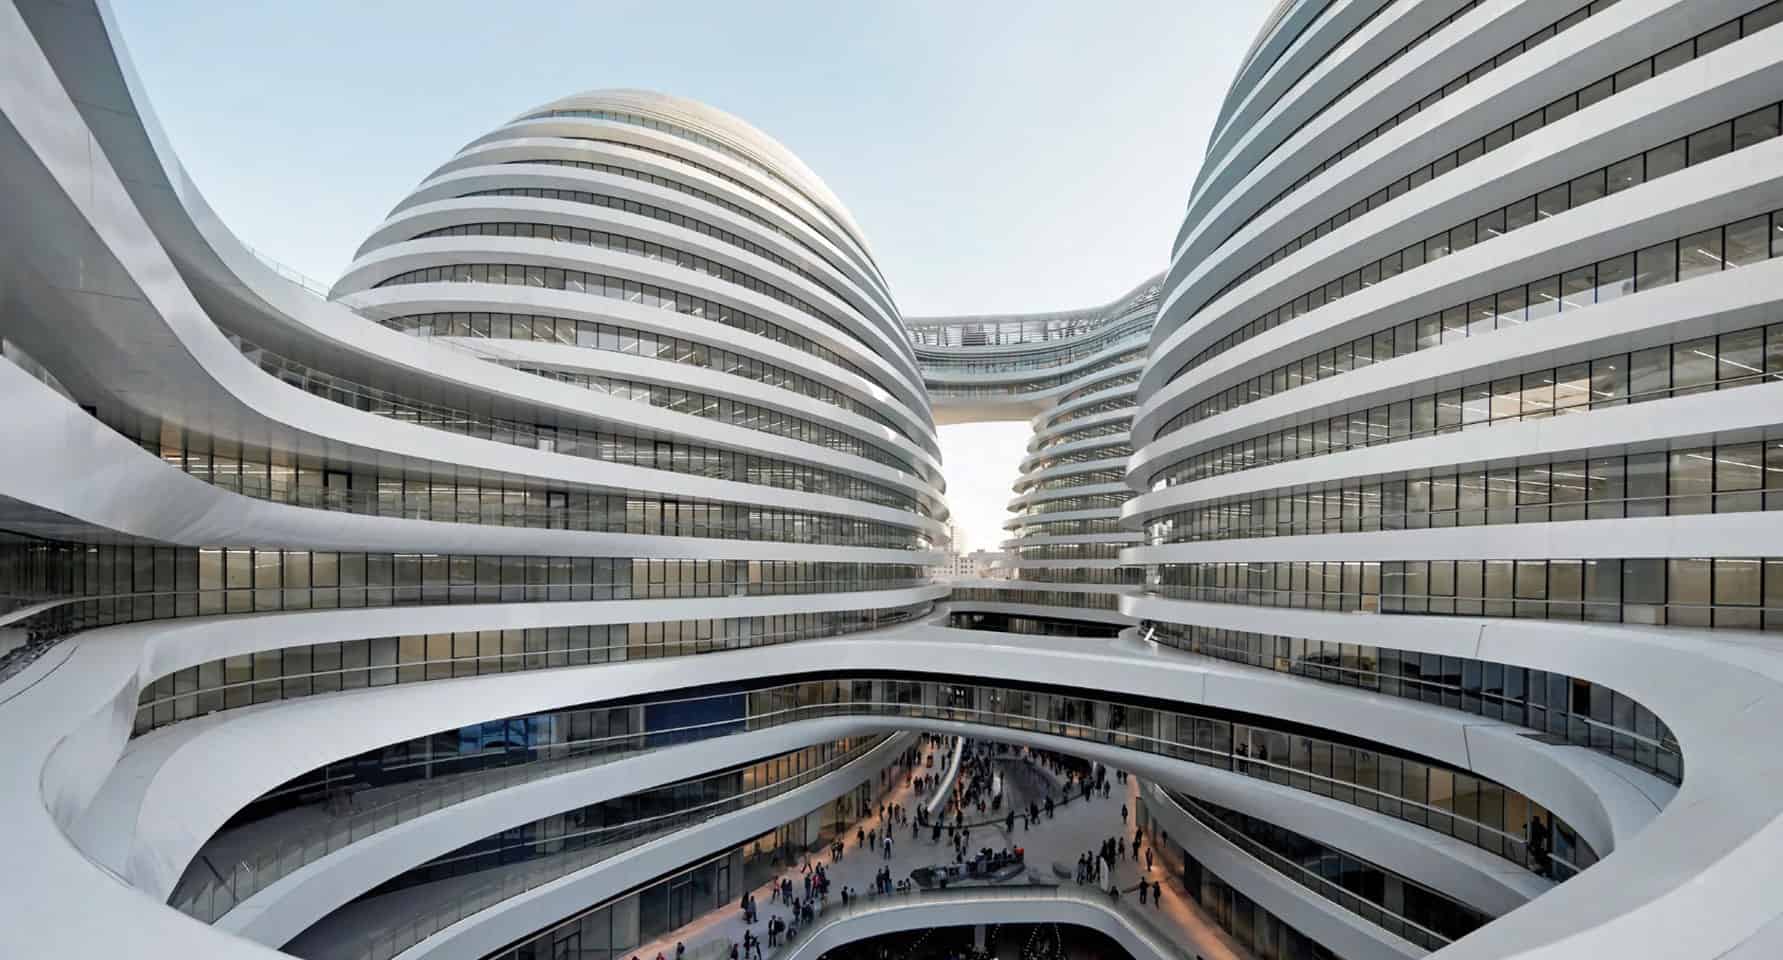 Kdo je Zaha Hadid, legenda moderne arhitekture?